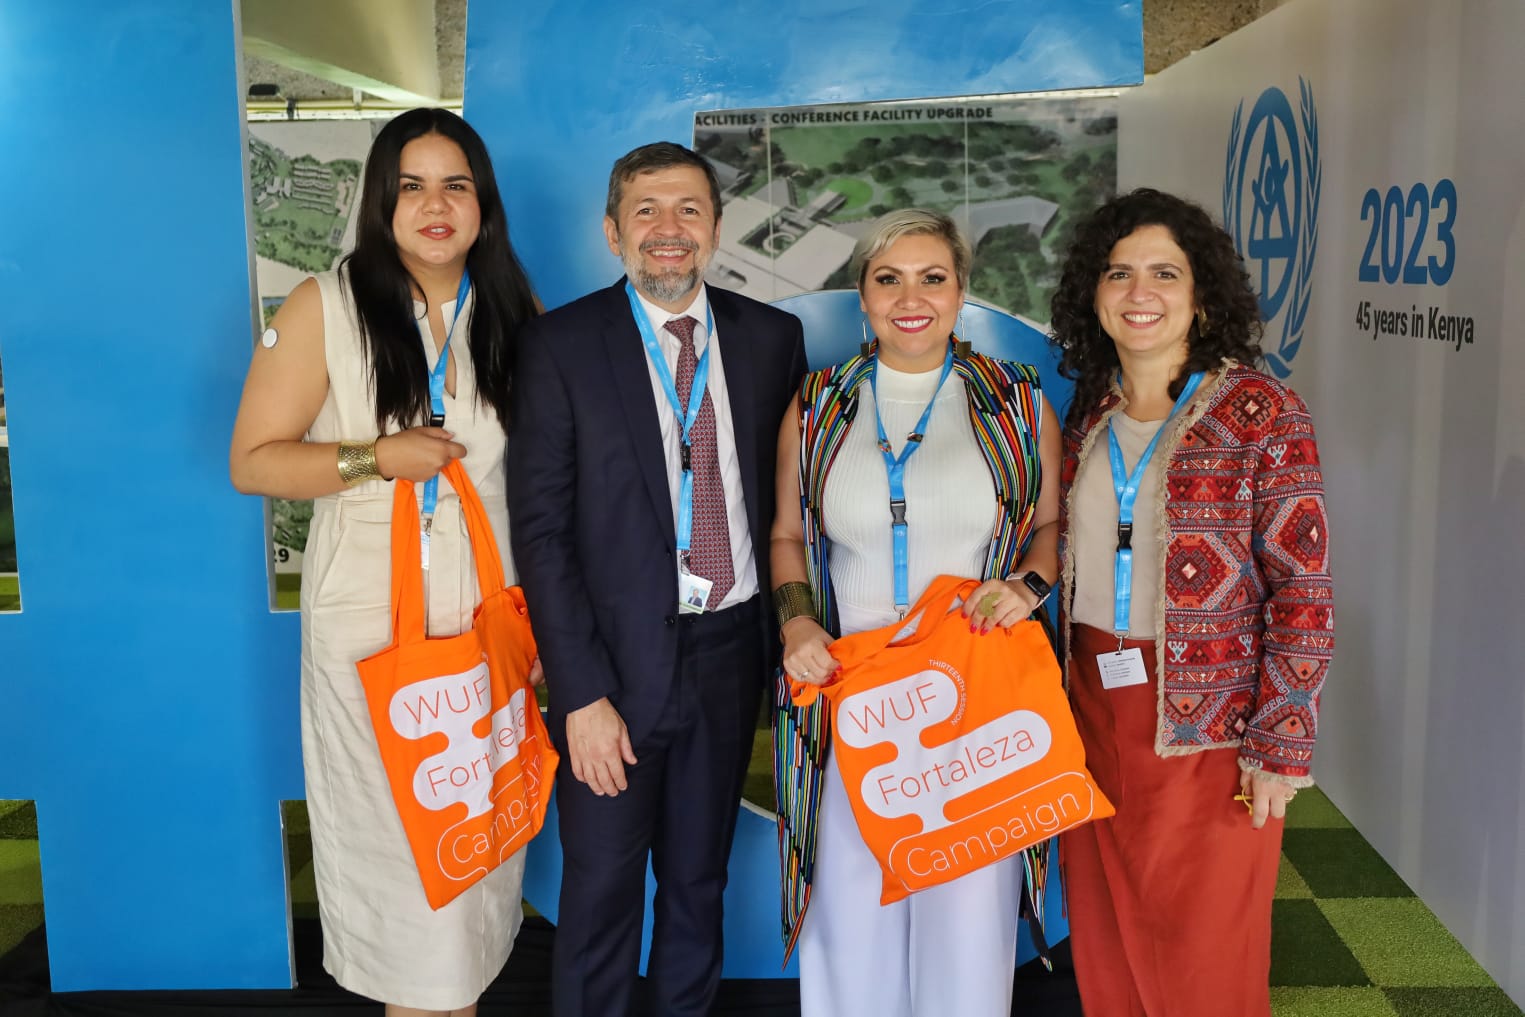 Com Élcio Batista, prefeitura de Fortaleza participa da Assembleia Geral da ONU-Habitat em Nairóbi